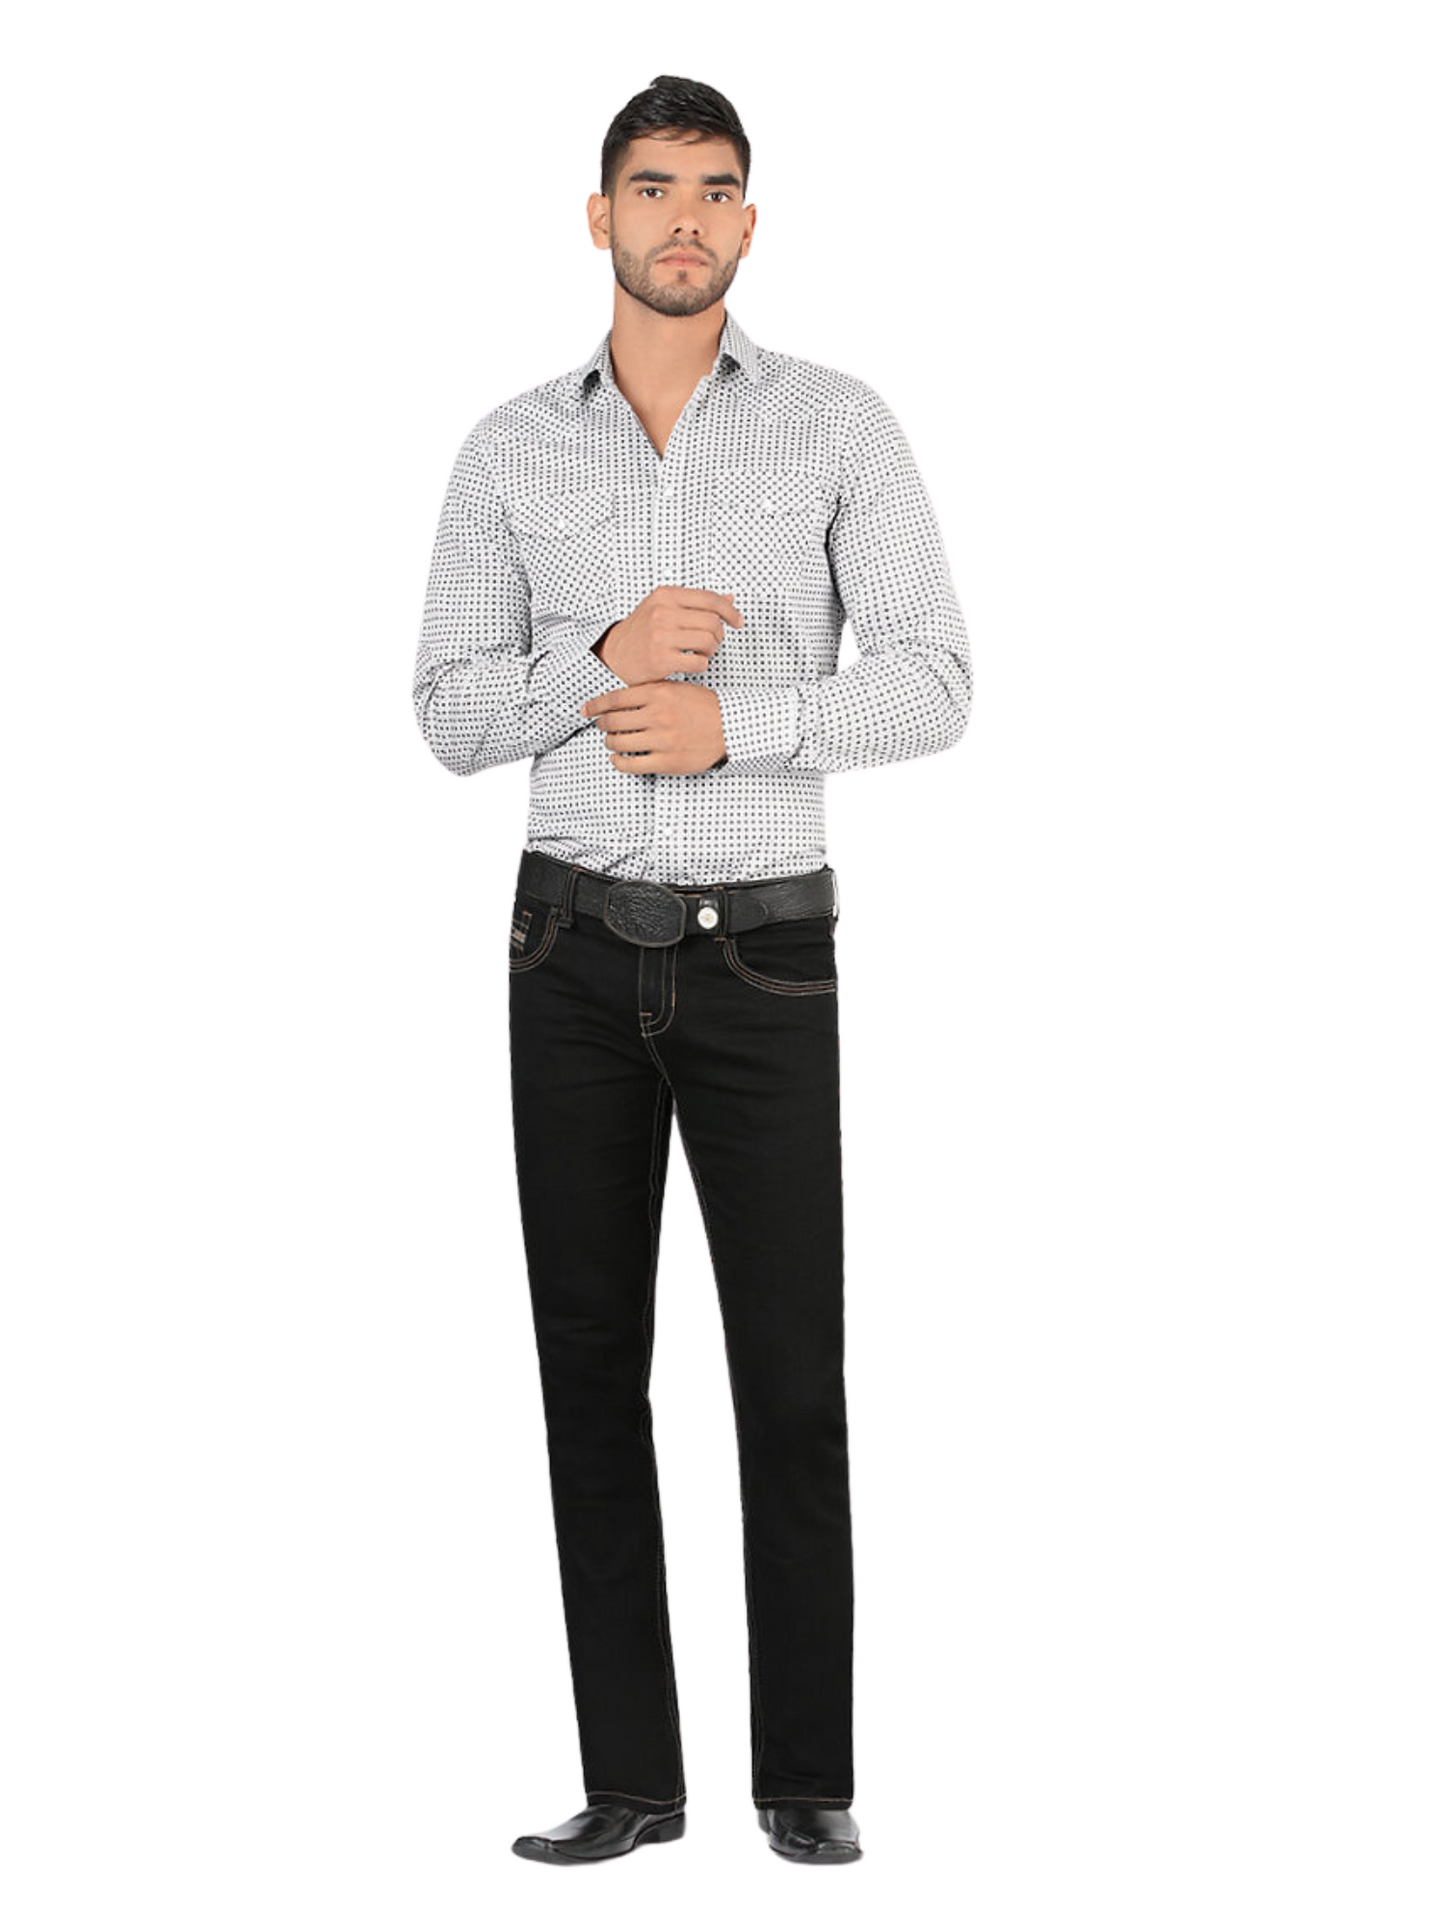 Stretch Denim Jeans for Men 'Montero' - ID: 5307 Denim Jeans Montero Black